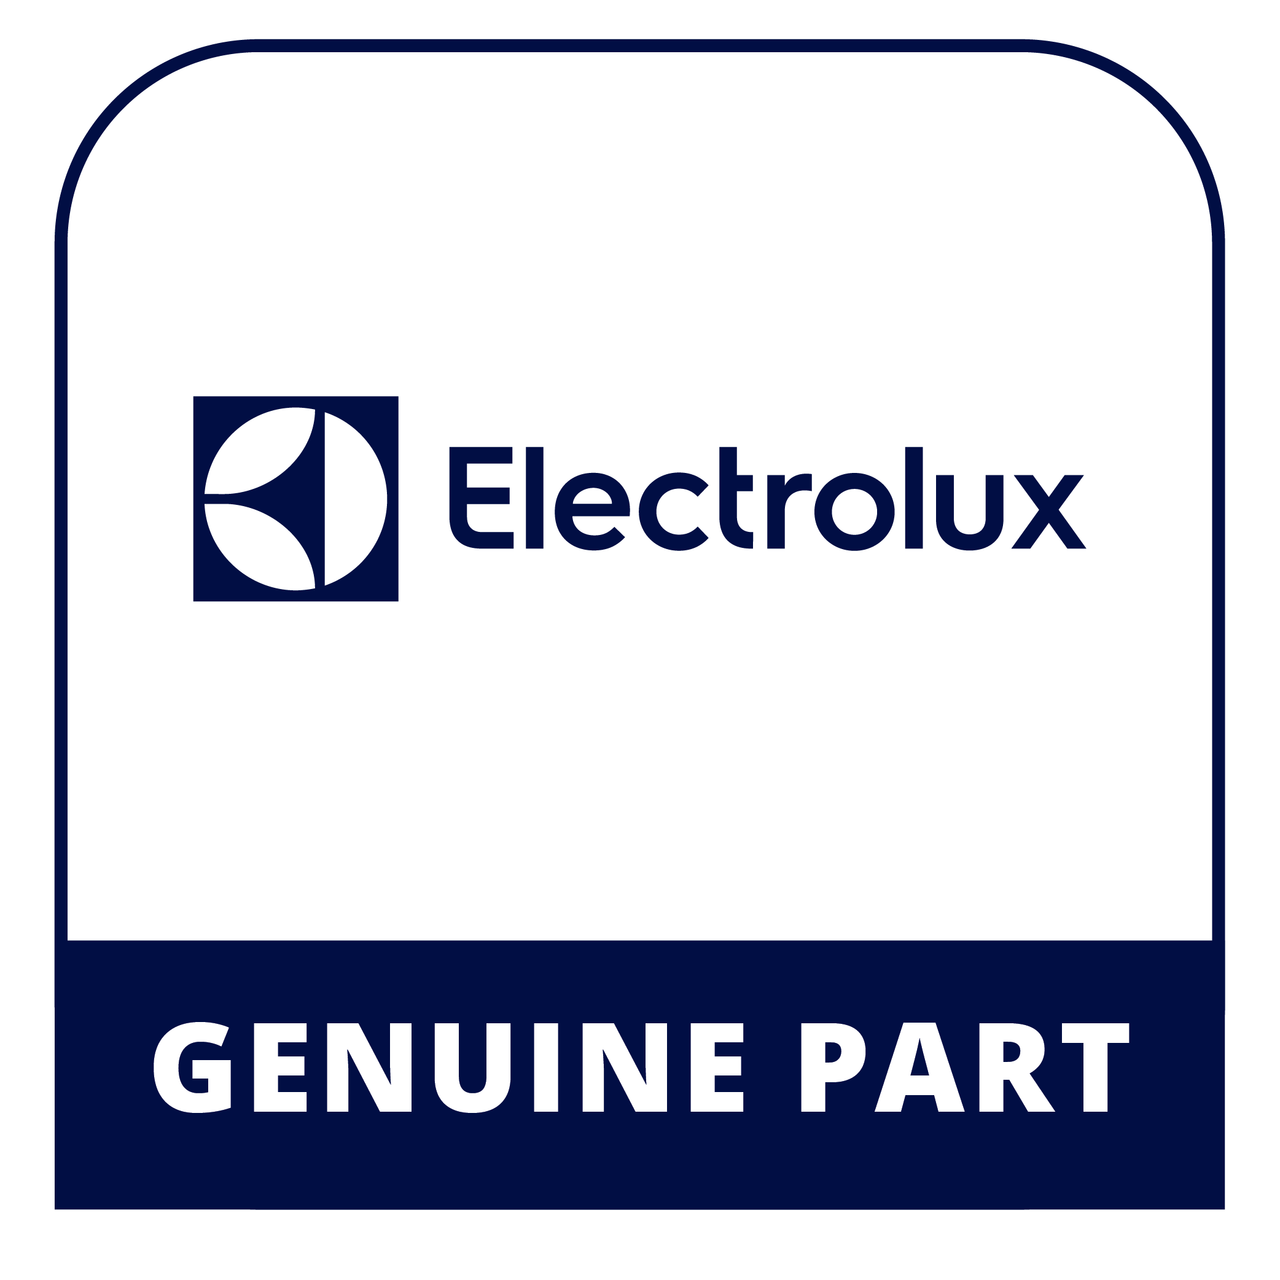 Frigidaire - Electrolux 5304476793 Panel - Genuine Electrolux Part